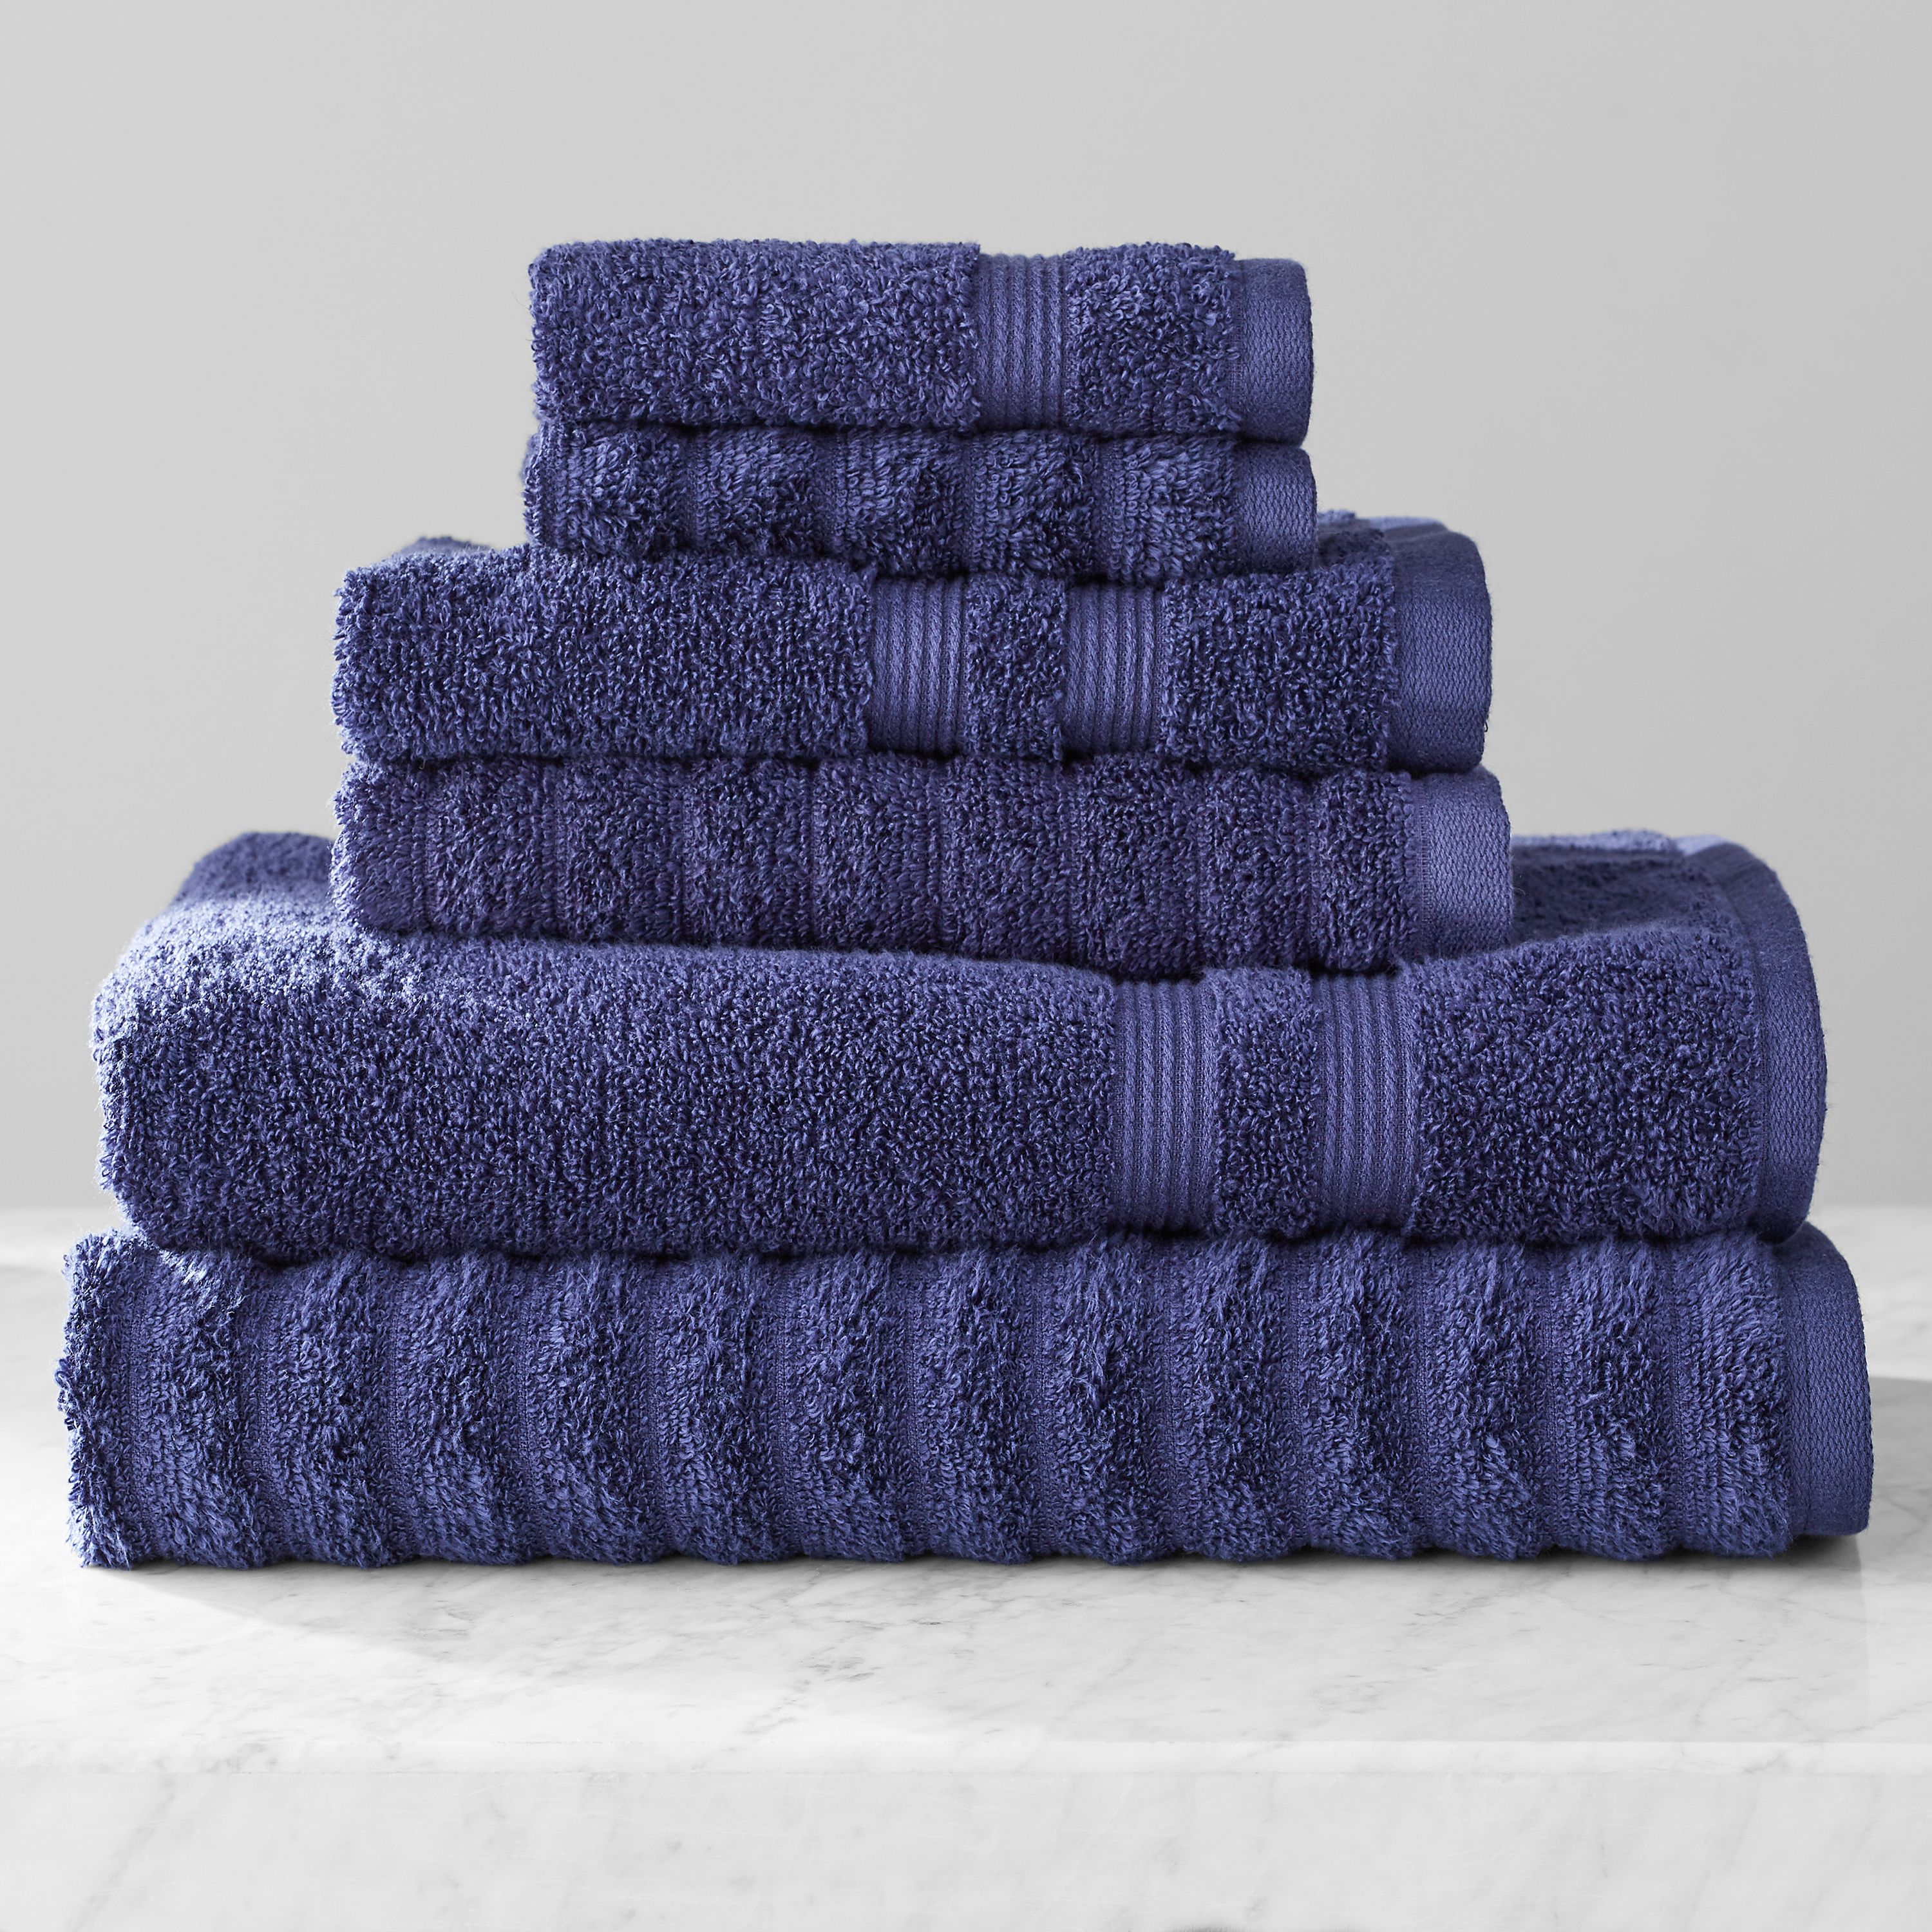 Mainstays Performance Mix Textured 6-Piece Bath Towel Set - Navy Blue - image 1 of 9